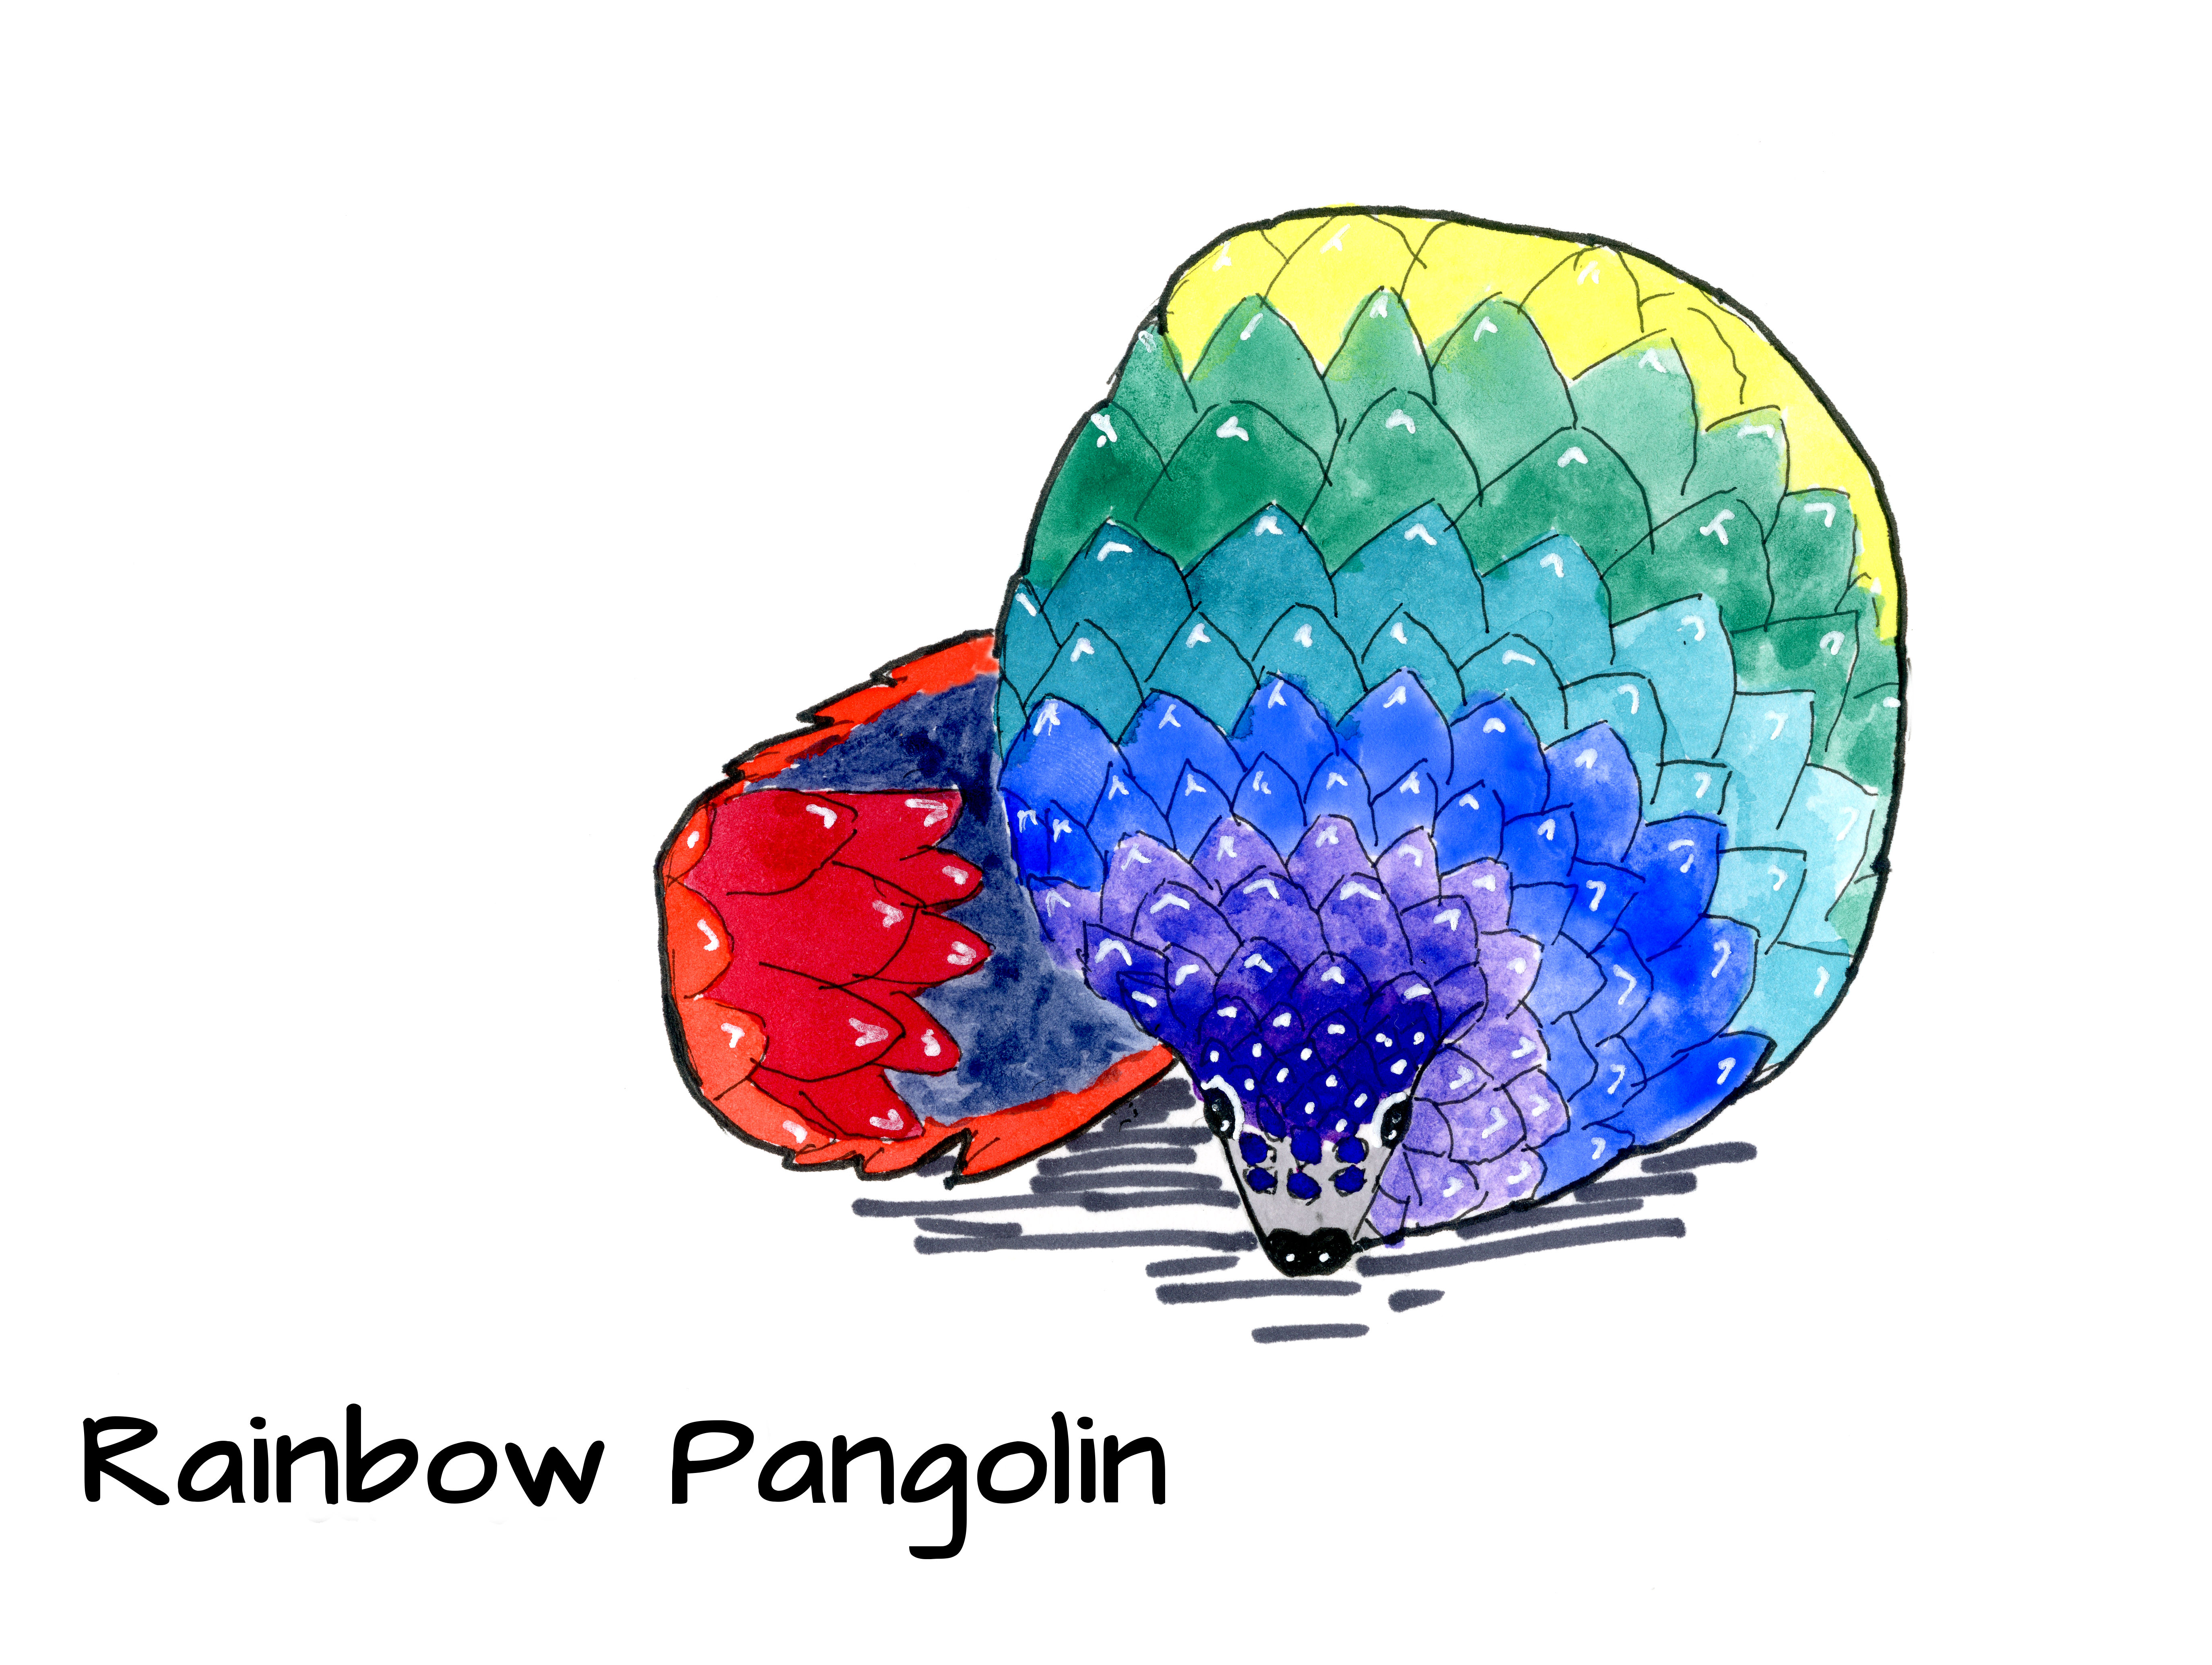 raindbow pangolin